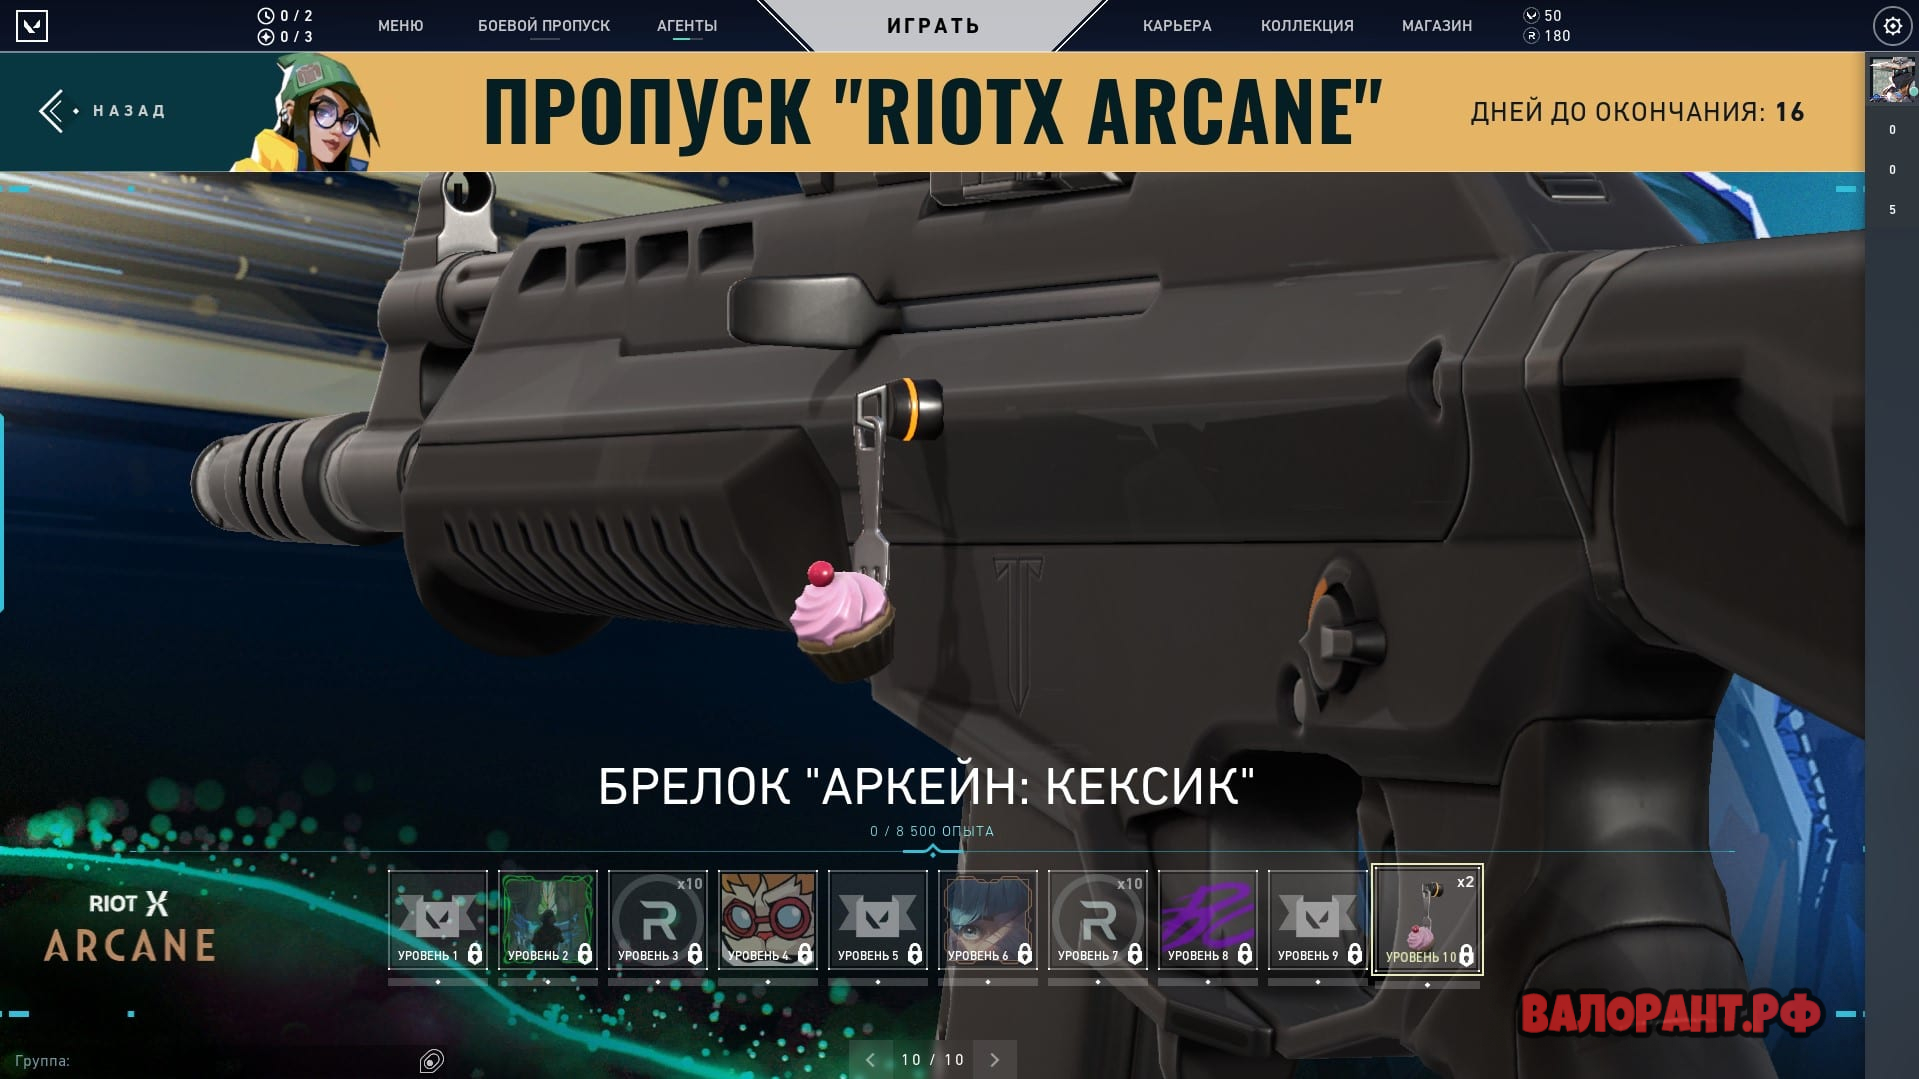 Propusk RiotX Arcane Brelok Arkejn Keksik - Новое событие в Валорант - RiotX Arcane